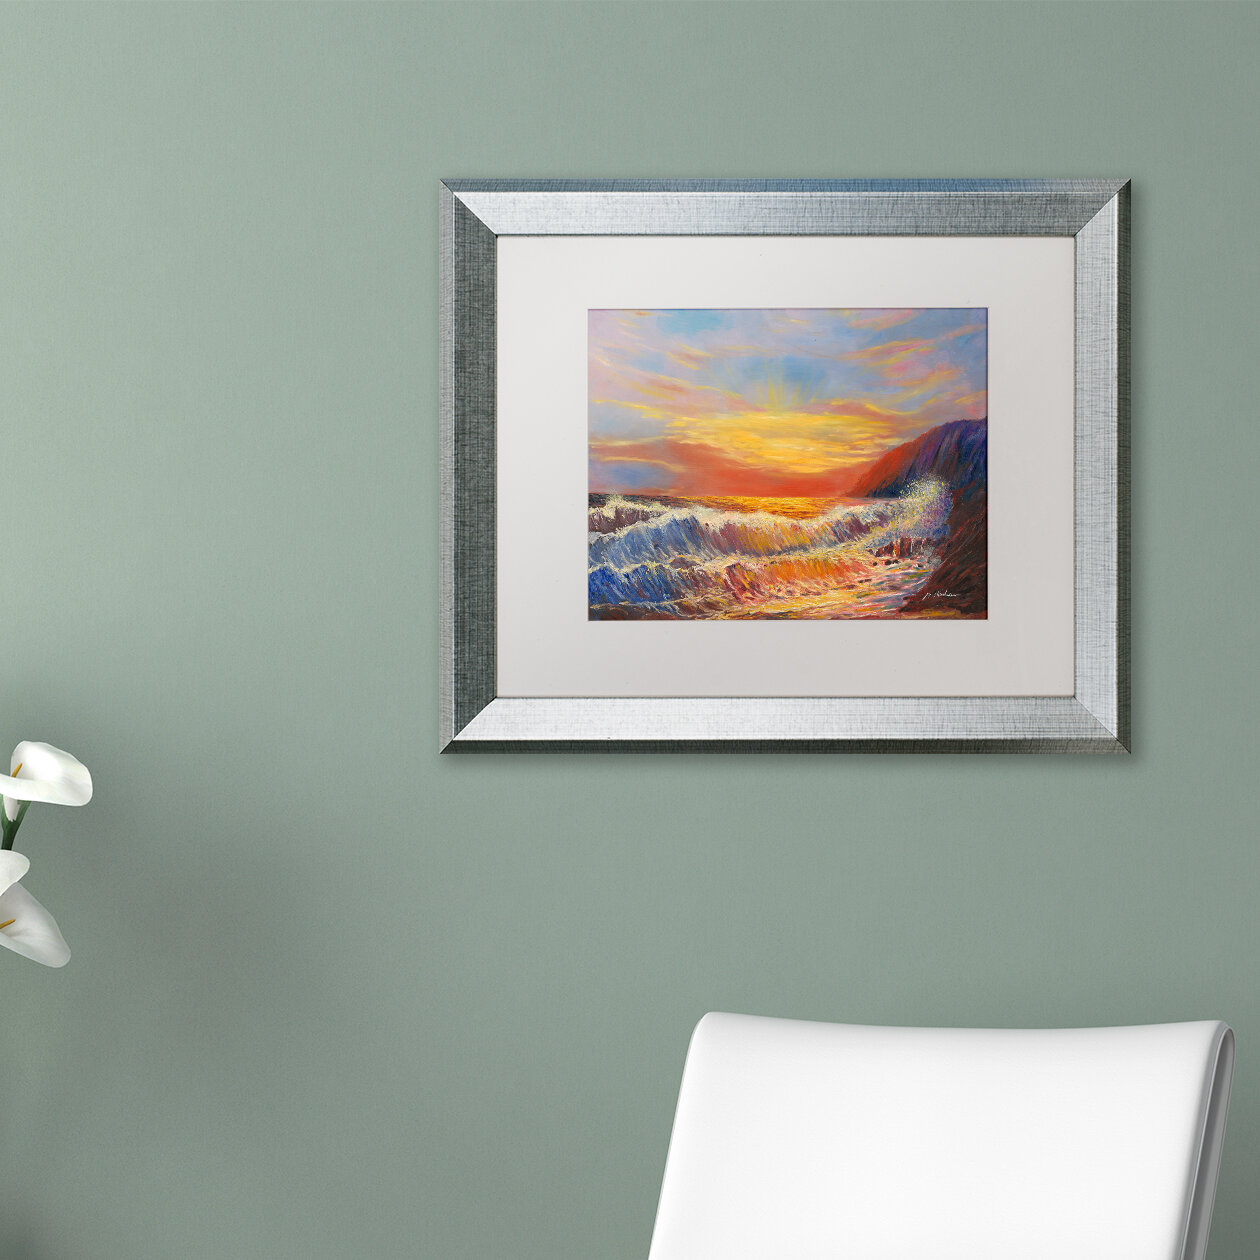 Trademark Art Hawaiian Sunset Framed Print On Canvas Wayfair